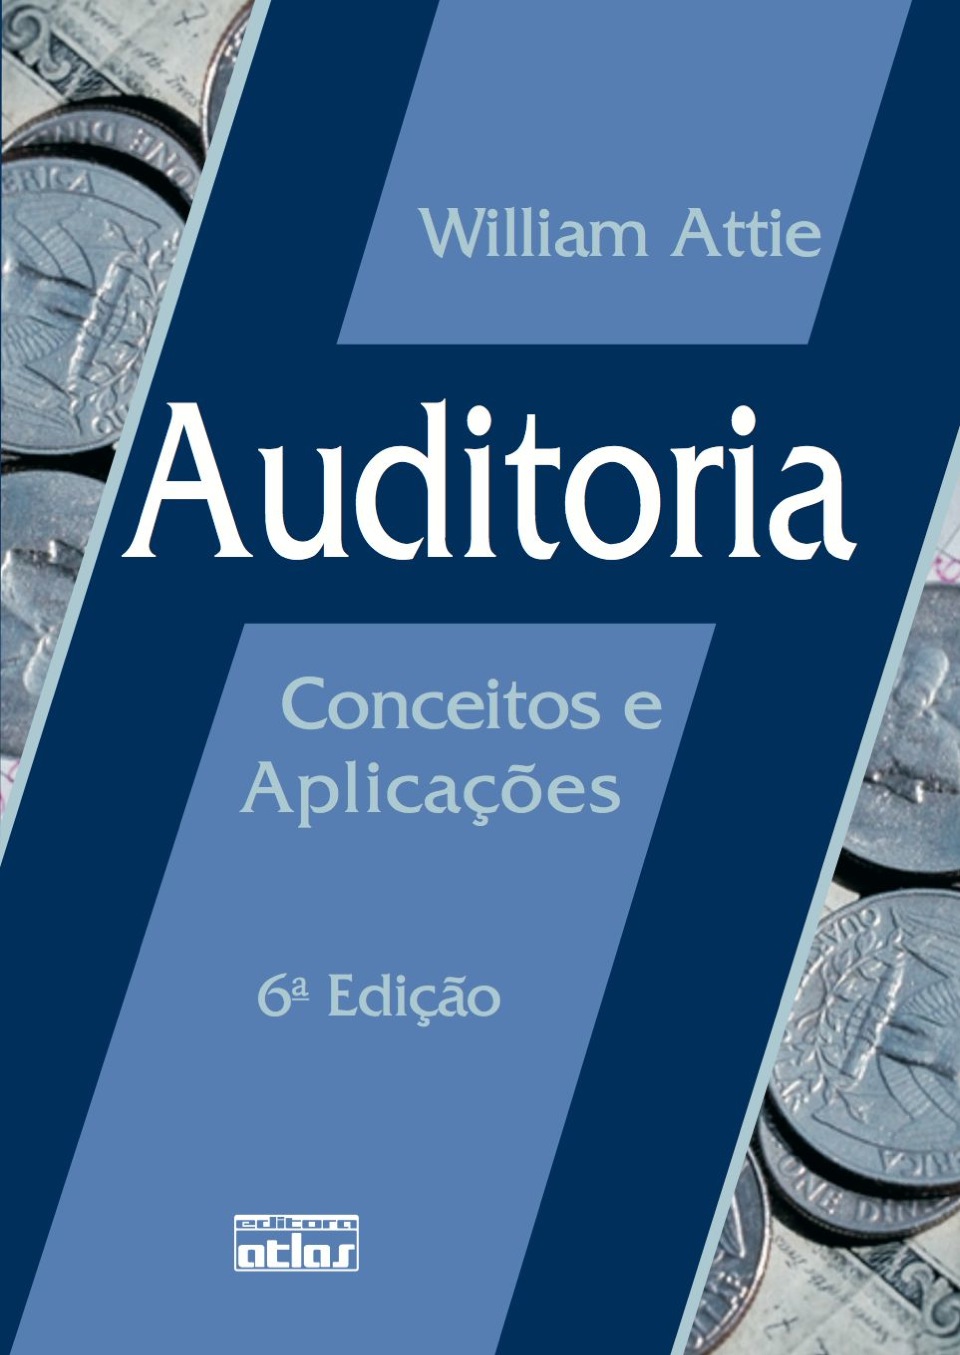 Livro auditoria interna william attie pdf free